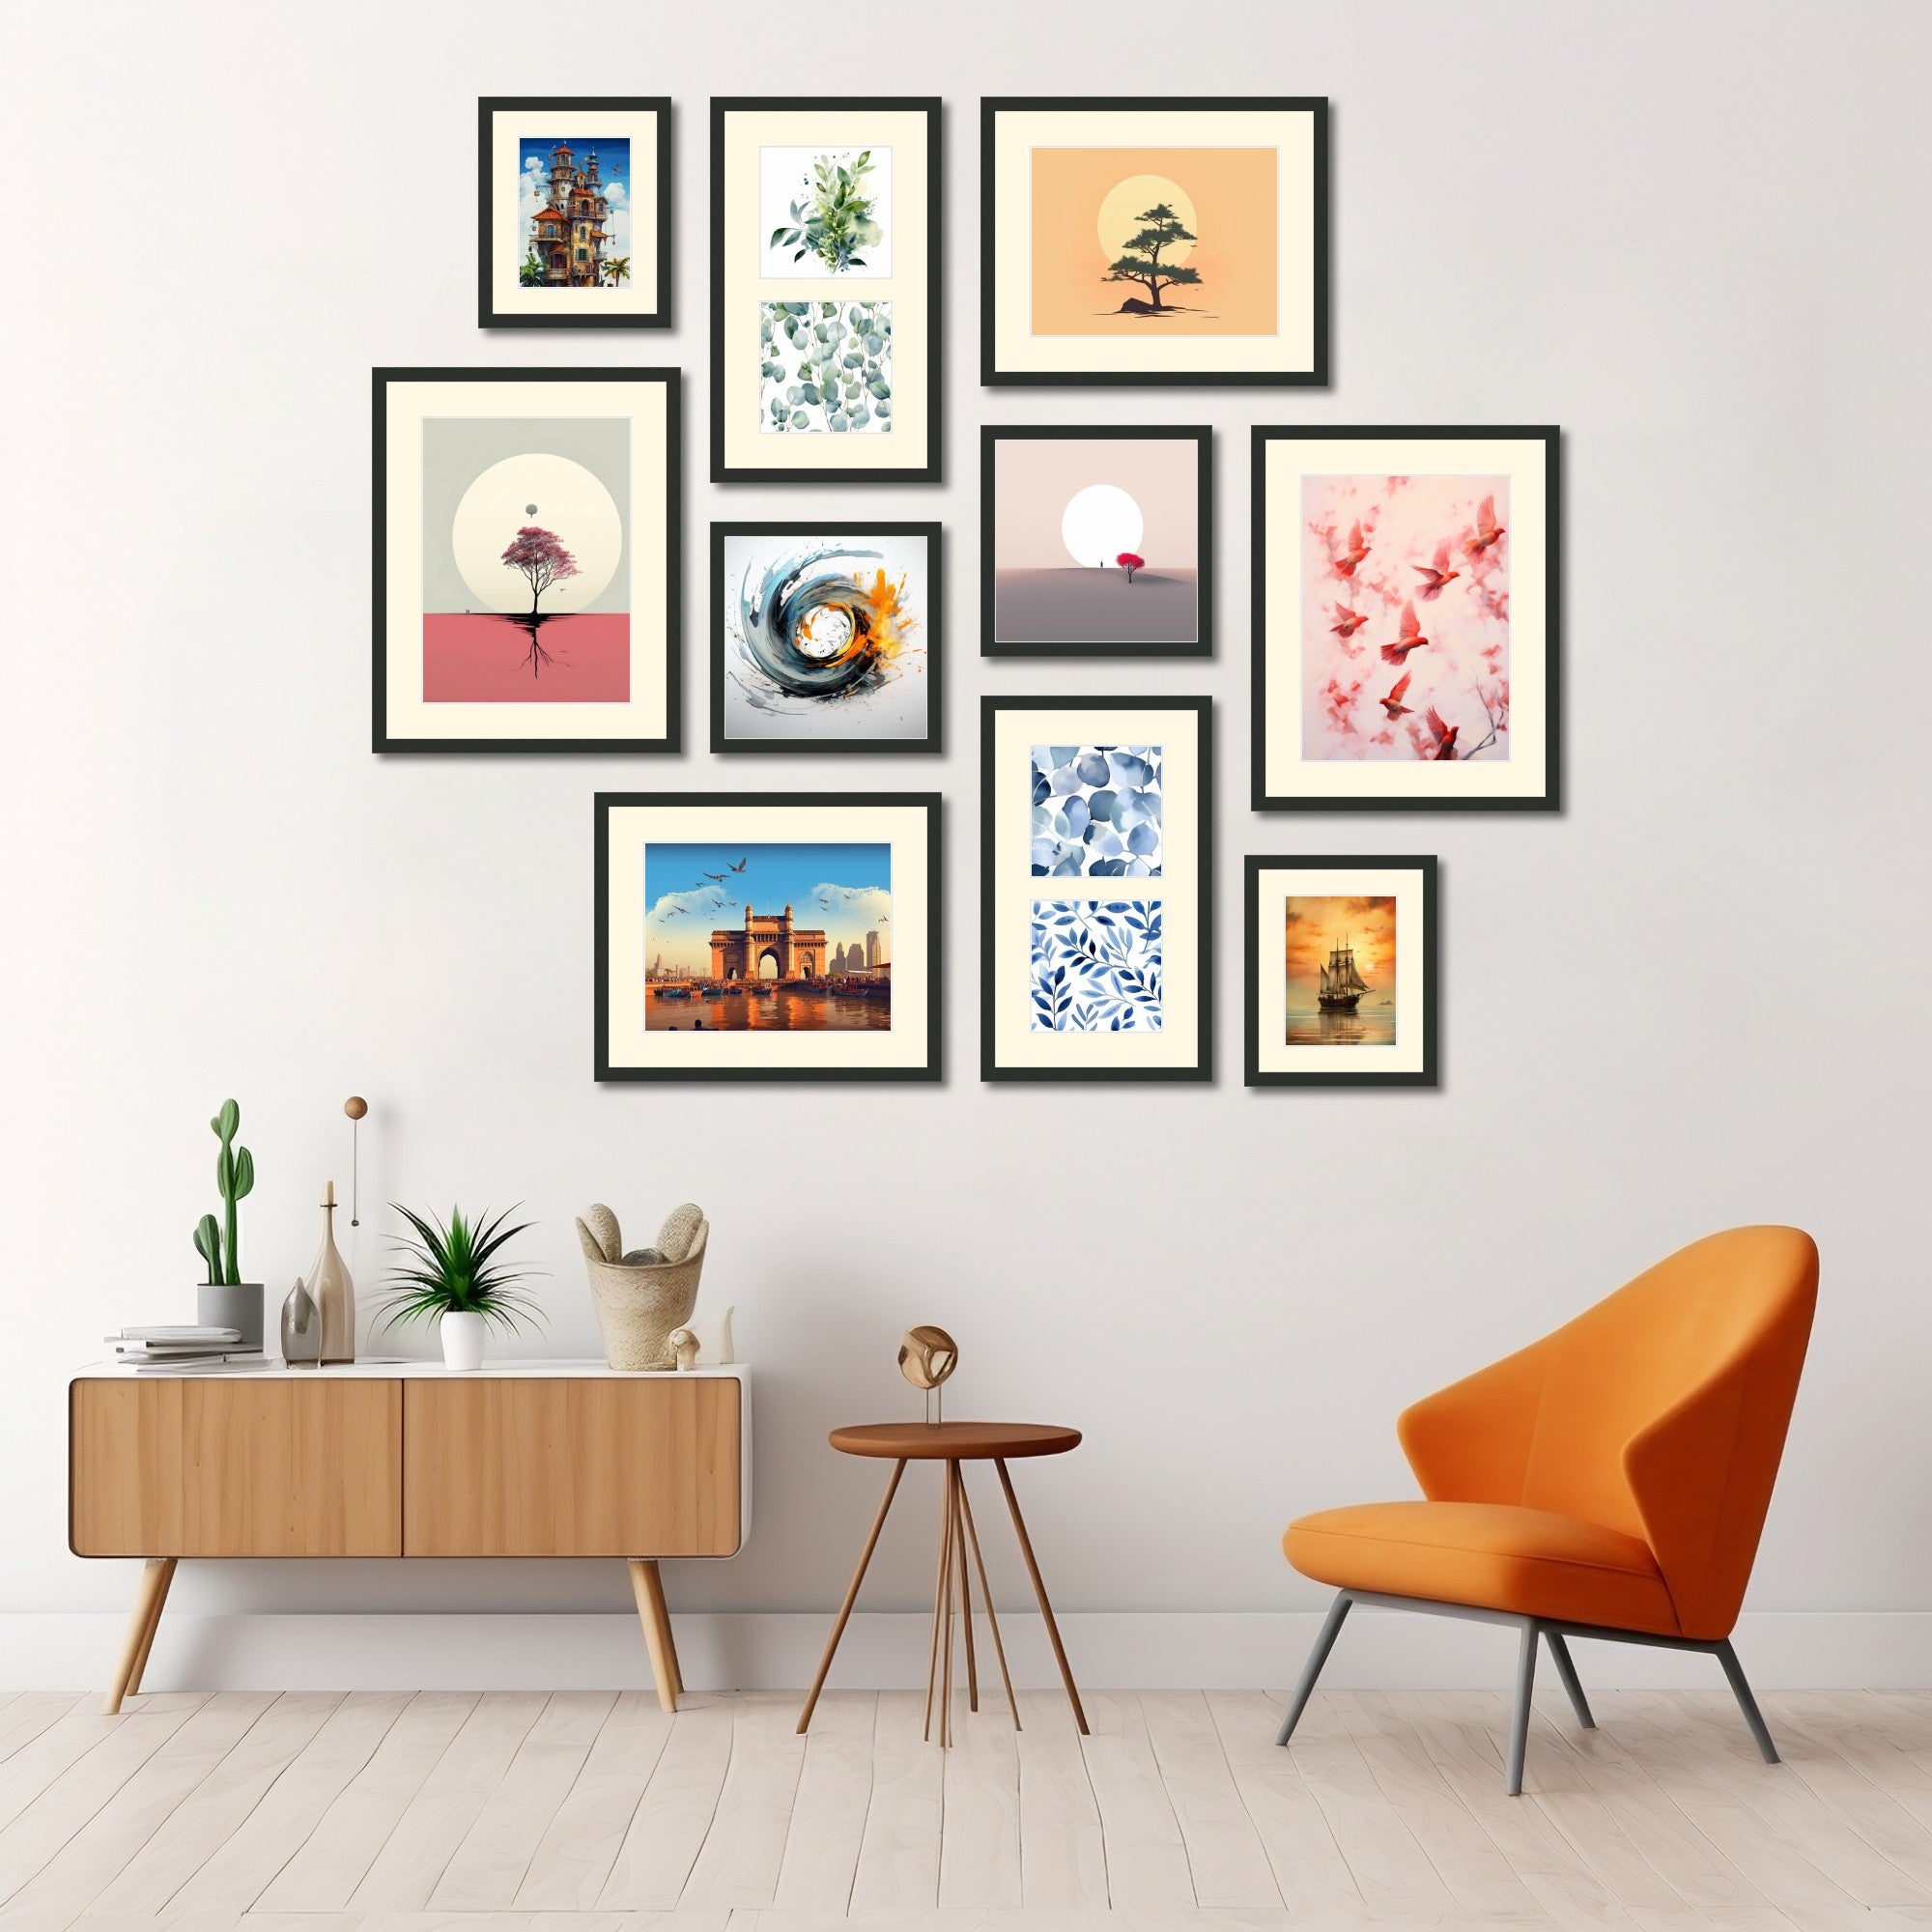 10 Great Photo Display Ideas   Photo wall gallery, Photo wall